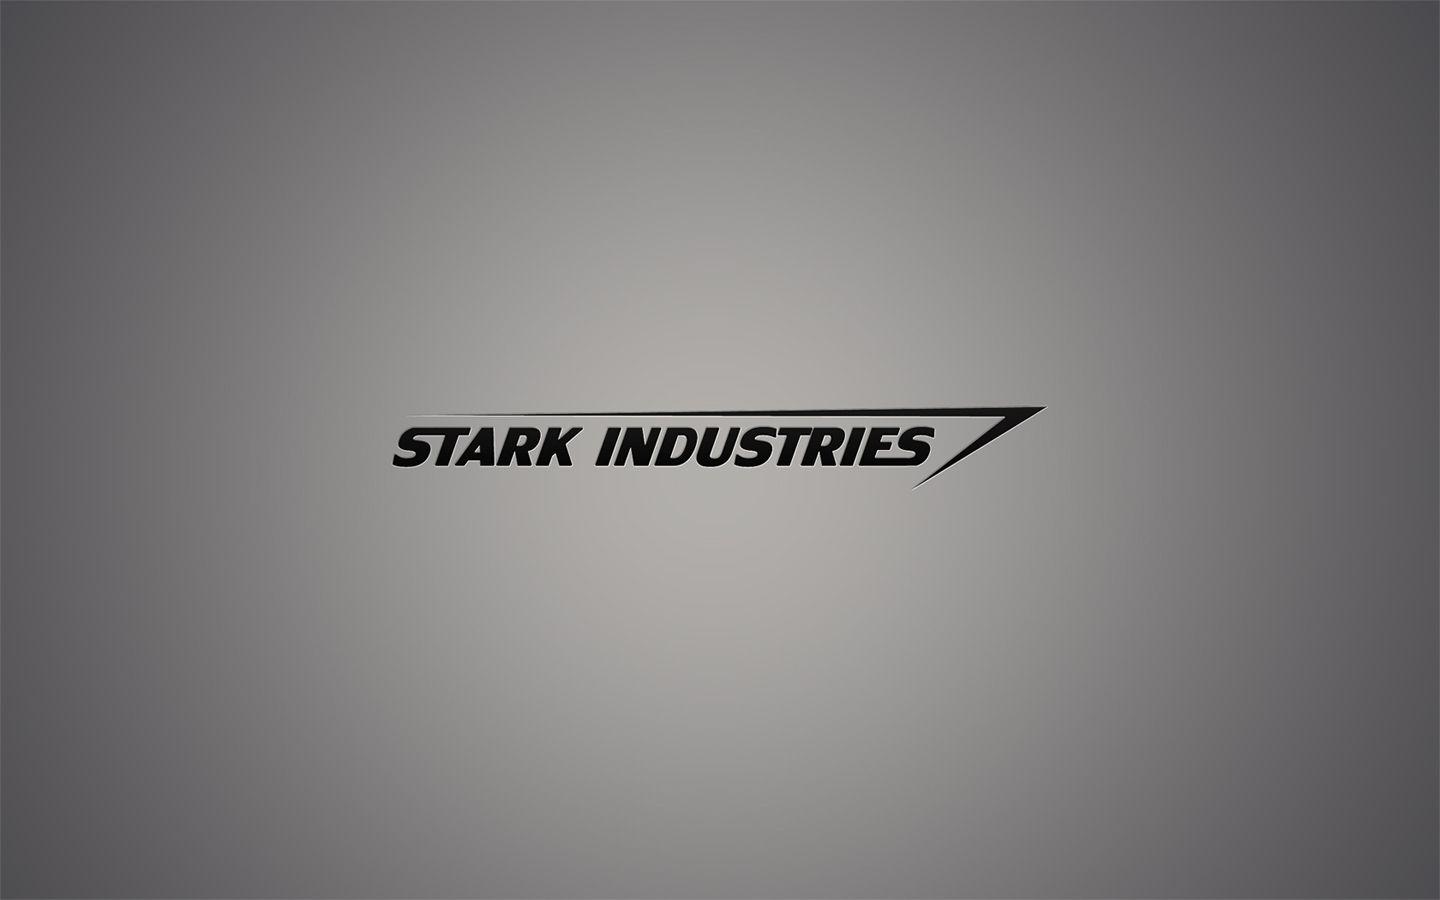 Stark Industries Wallpapers Group.